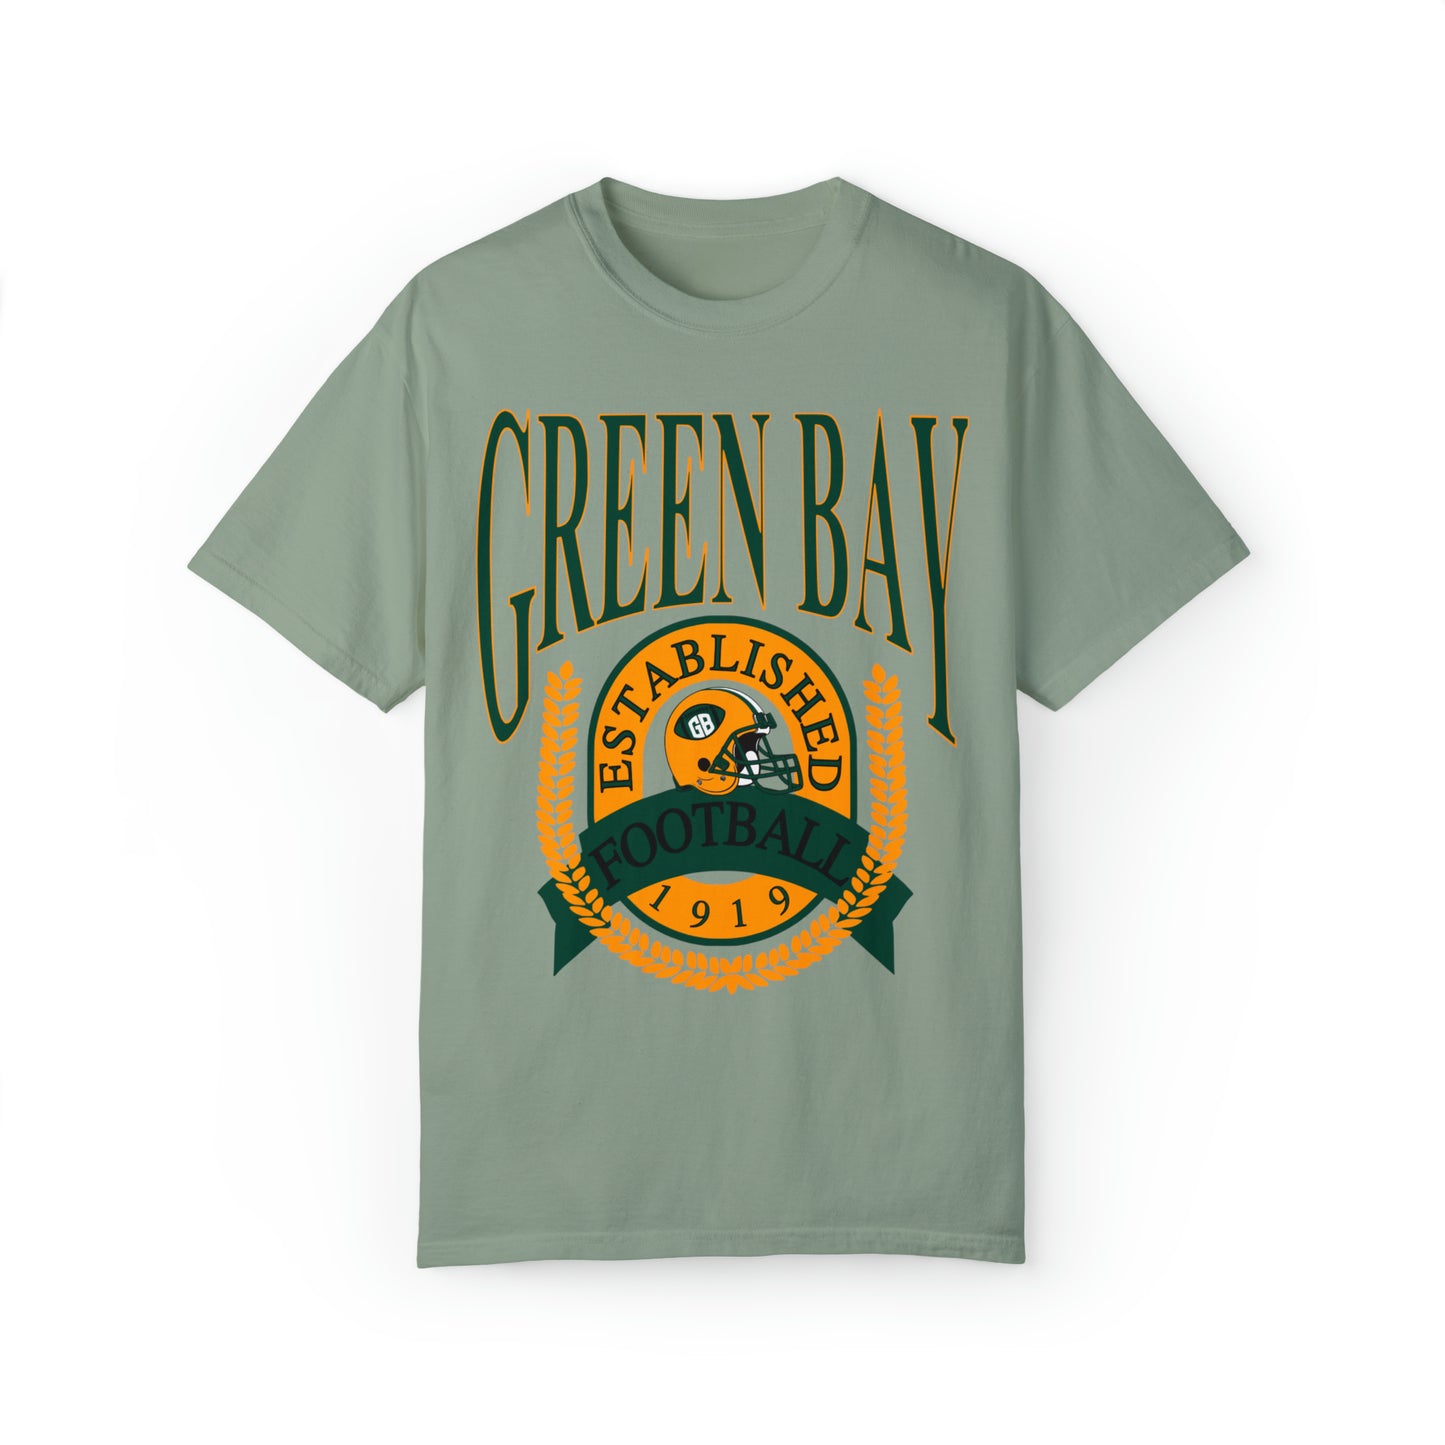 Comfort Colors Throwback Green Bay Packers Football Short Sleeve T-Shirt - Vintage Retro Tee - Men's Women's - Design 1